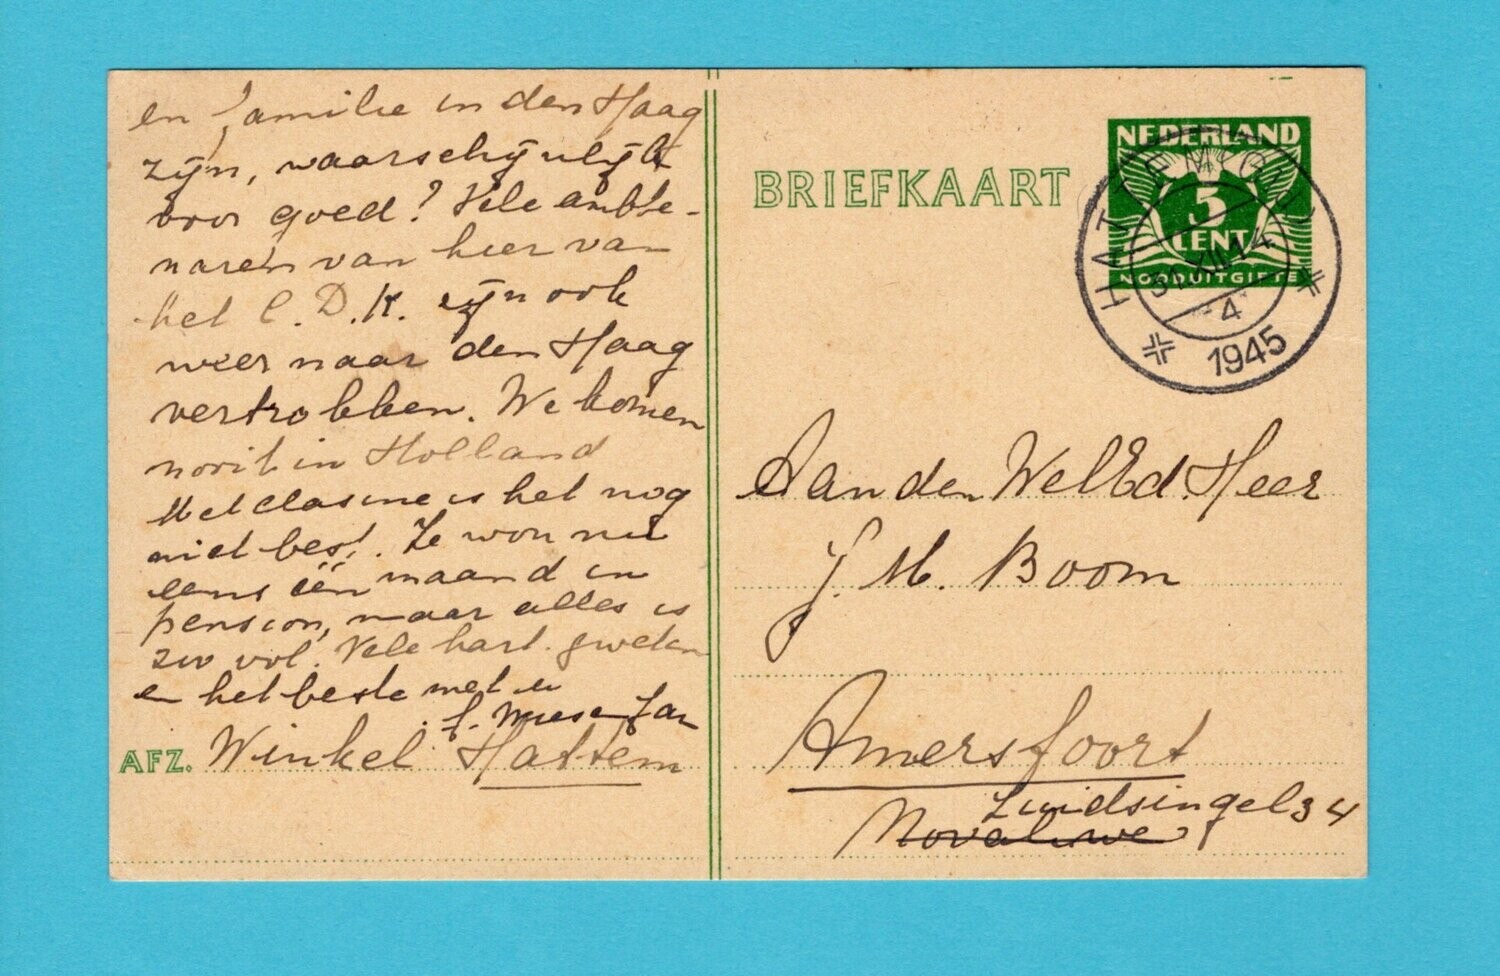 NEDERLAND briefkaart G#277f 1945 Hattem - Amersfoort